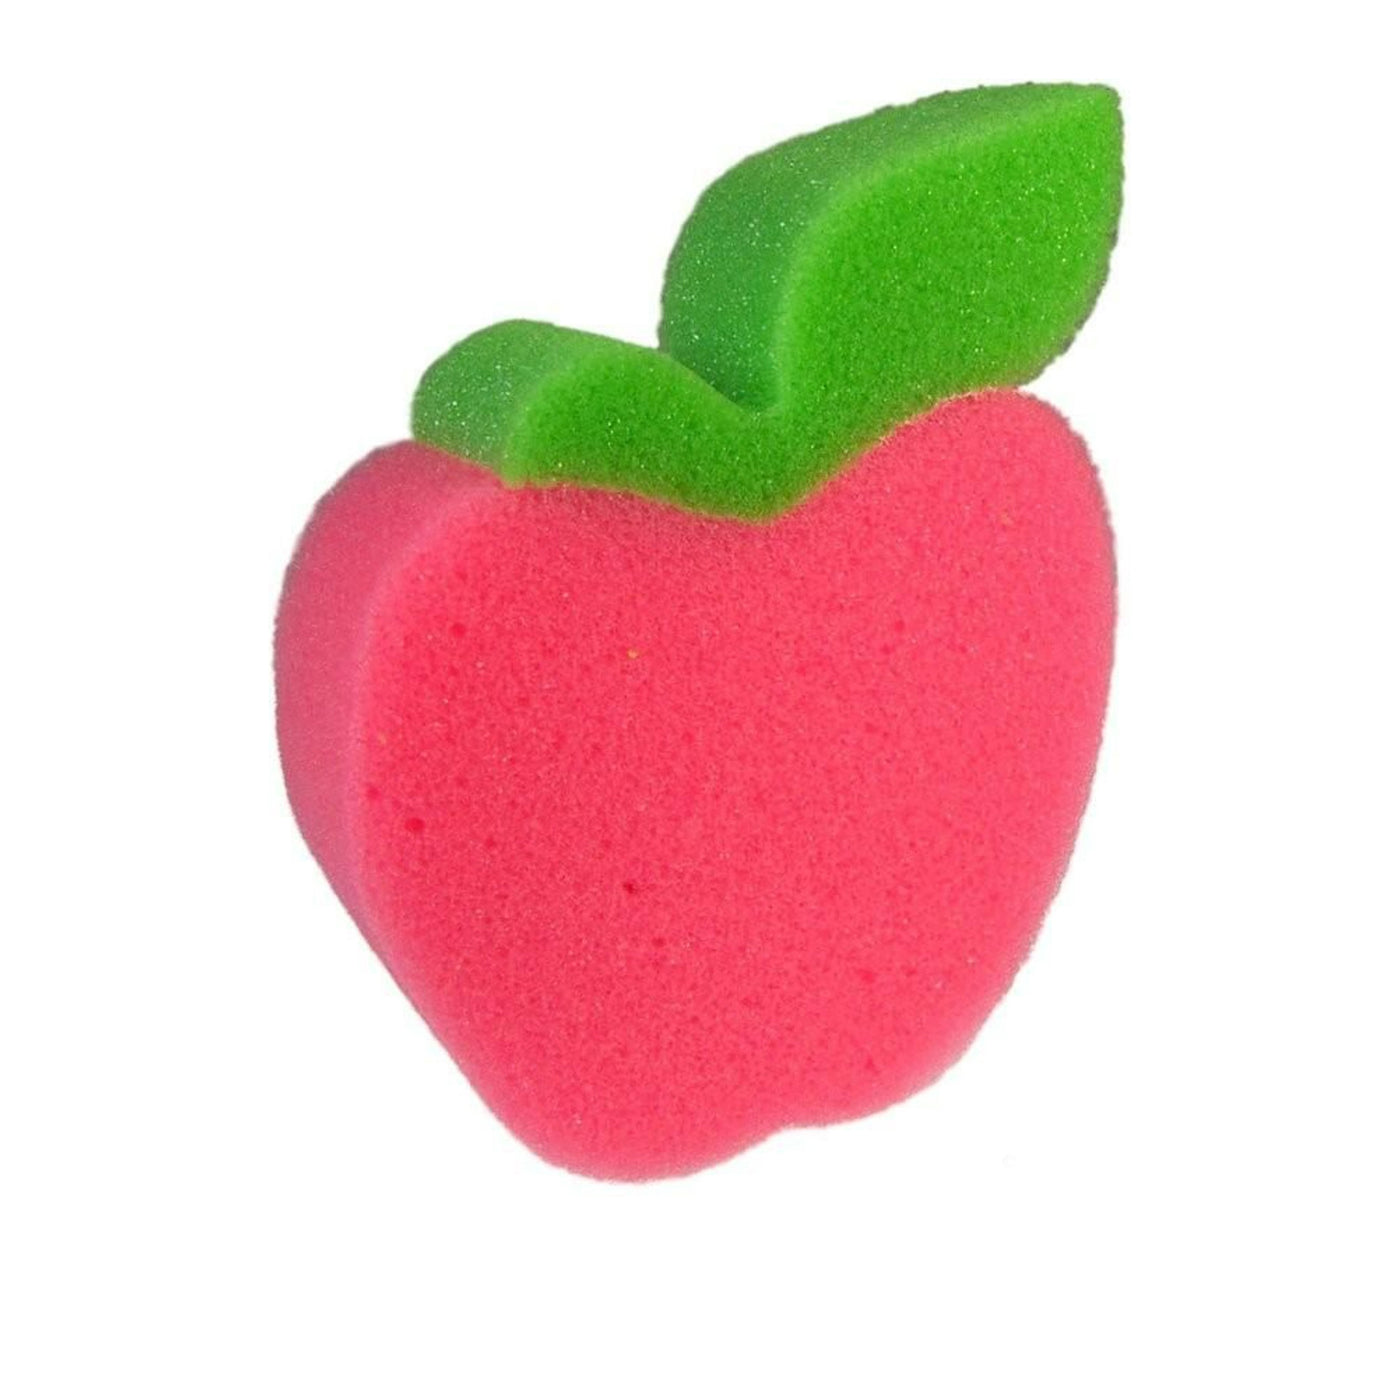 Set Of 2 Red Apple Novelty Body Sponges.